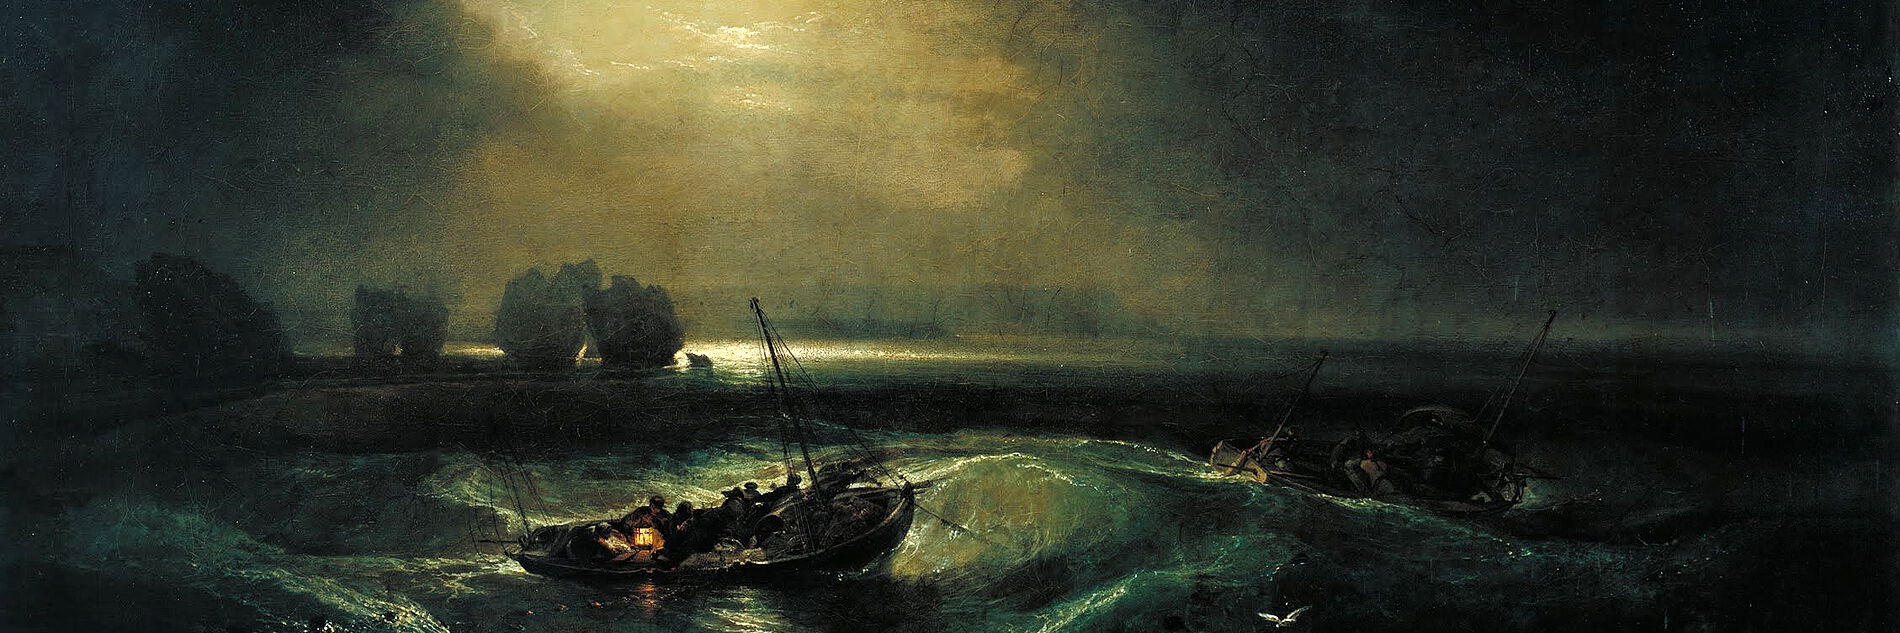 William Turner - Fishermen at Sea, 1796